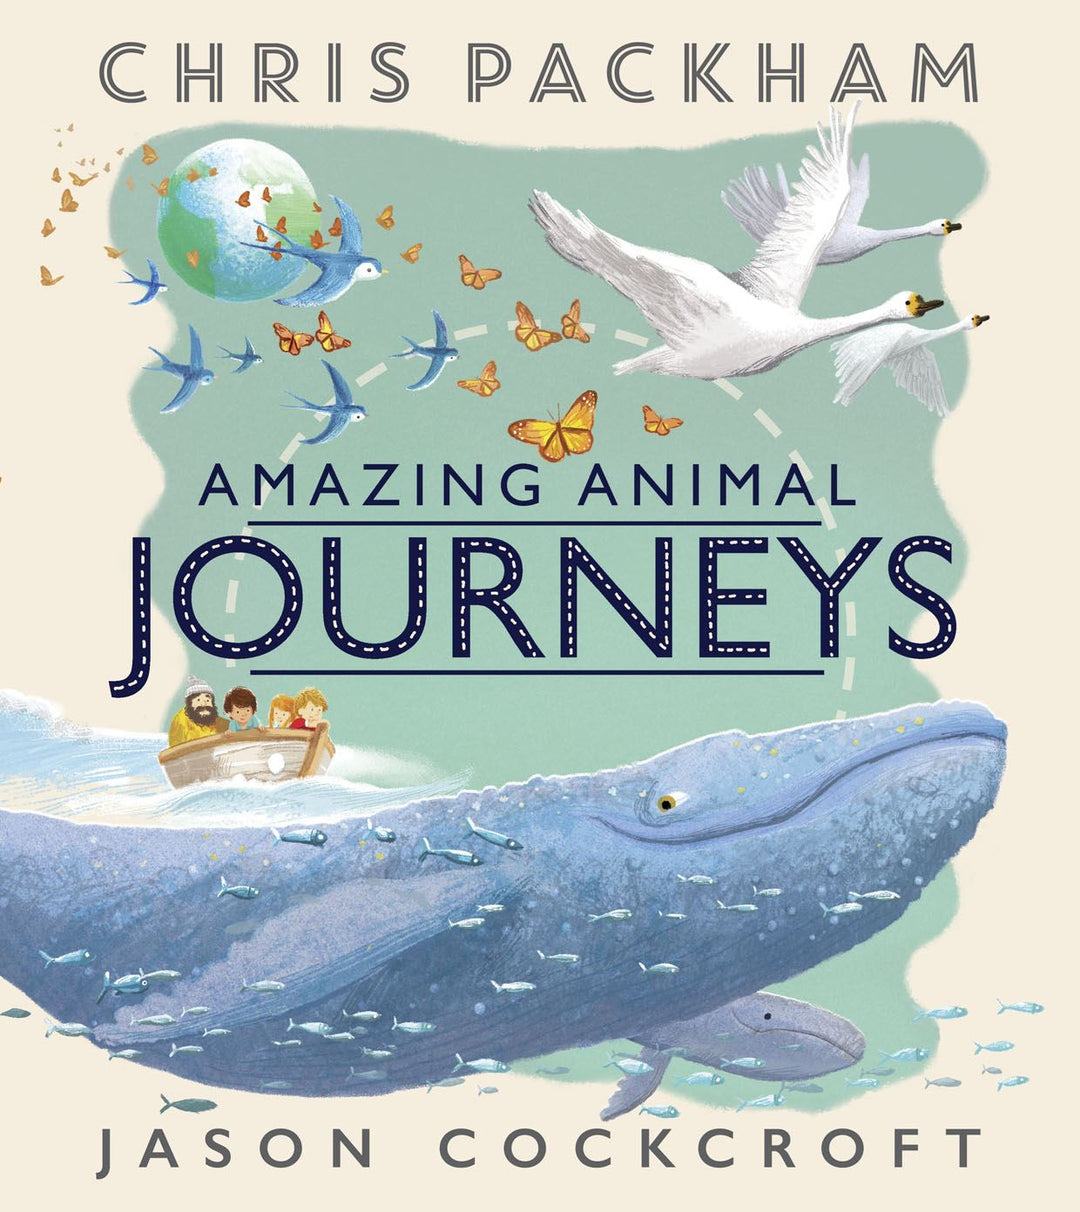 Amazing Animal Journeys